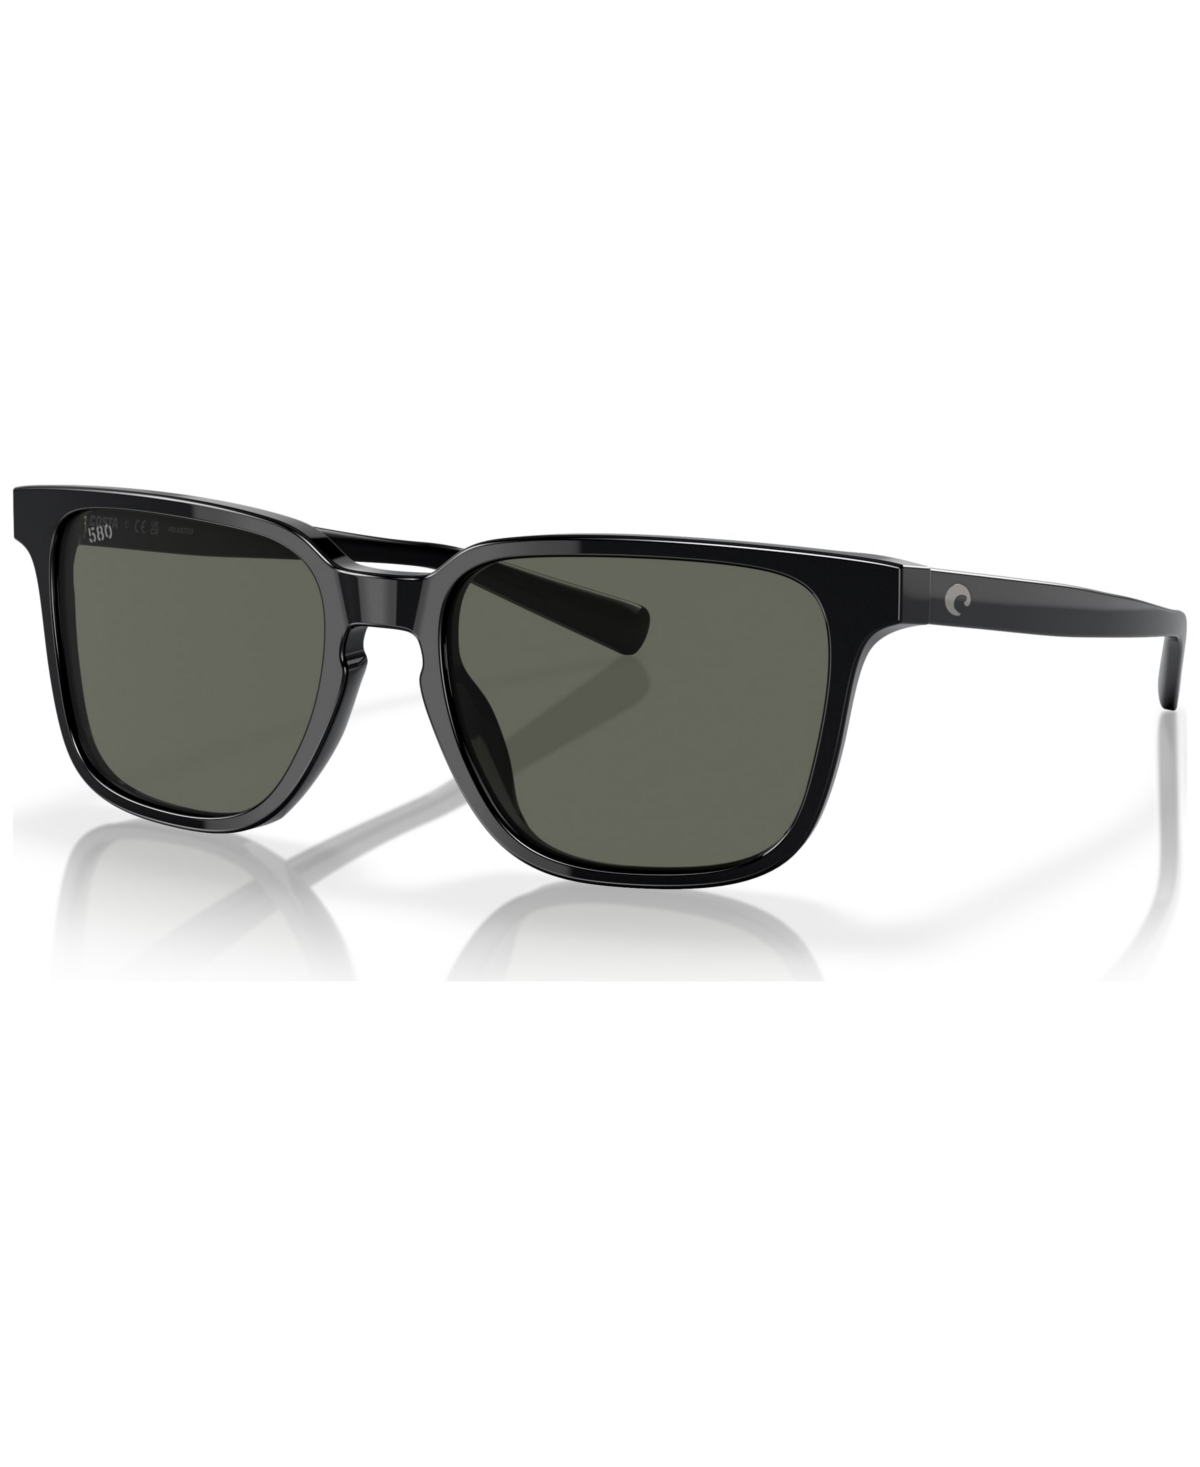 Men's Kailano Polarized Sunglasses, 6S2013 - Black